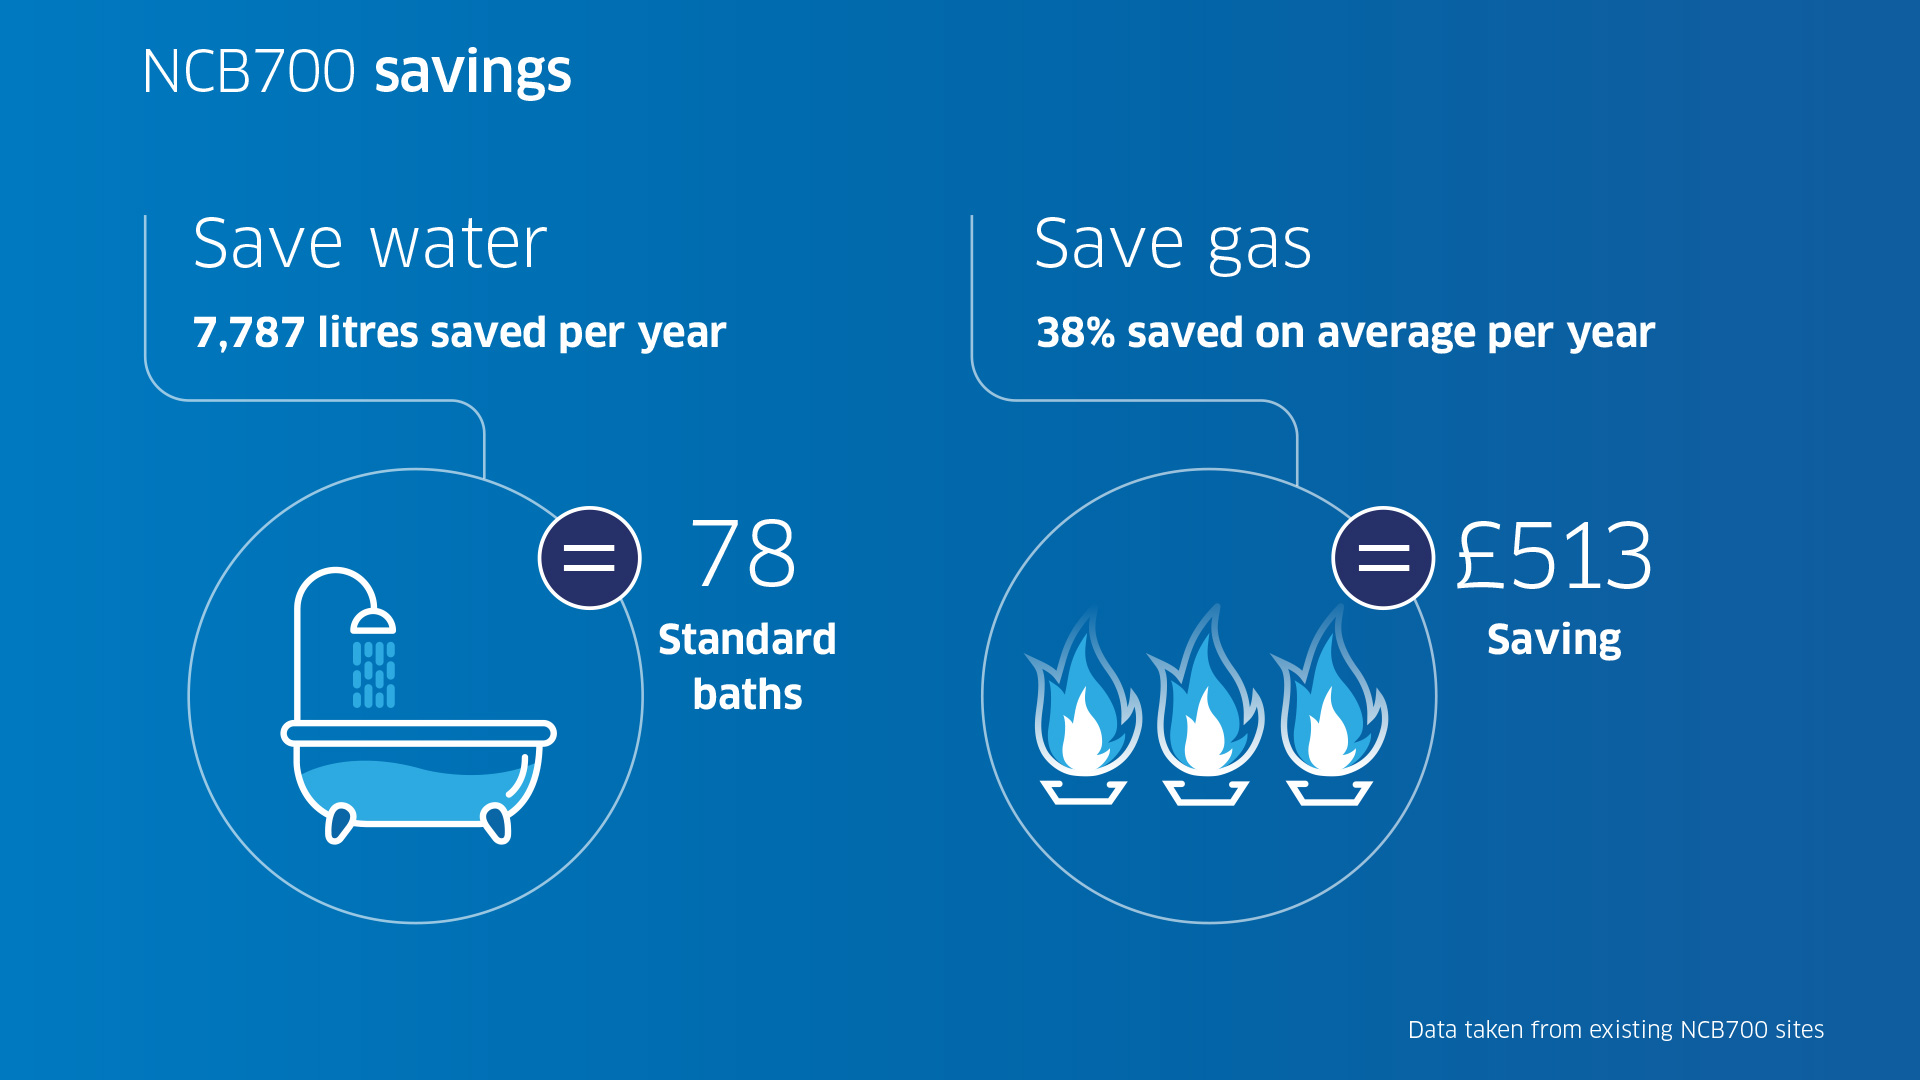 Navien NCB700 savings - Save Water and Gas